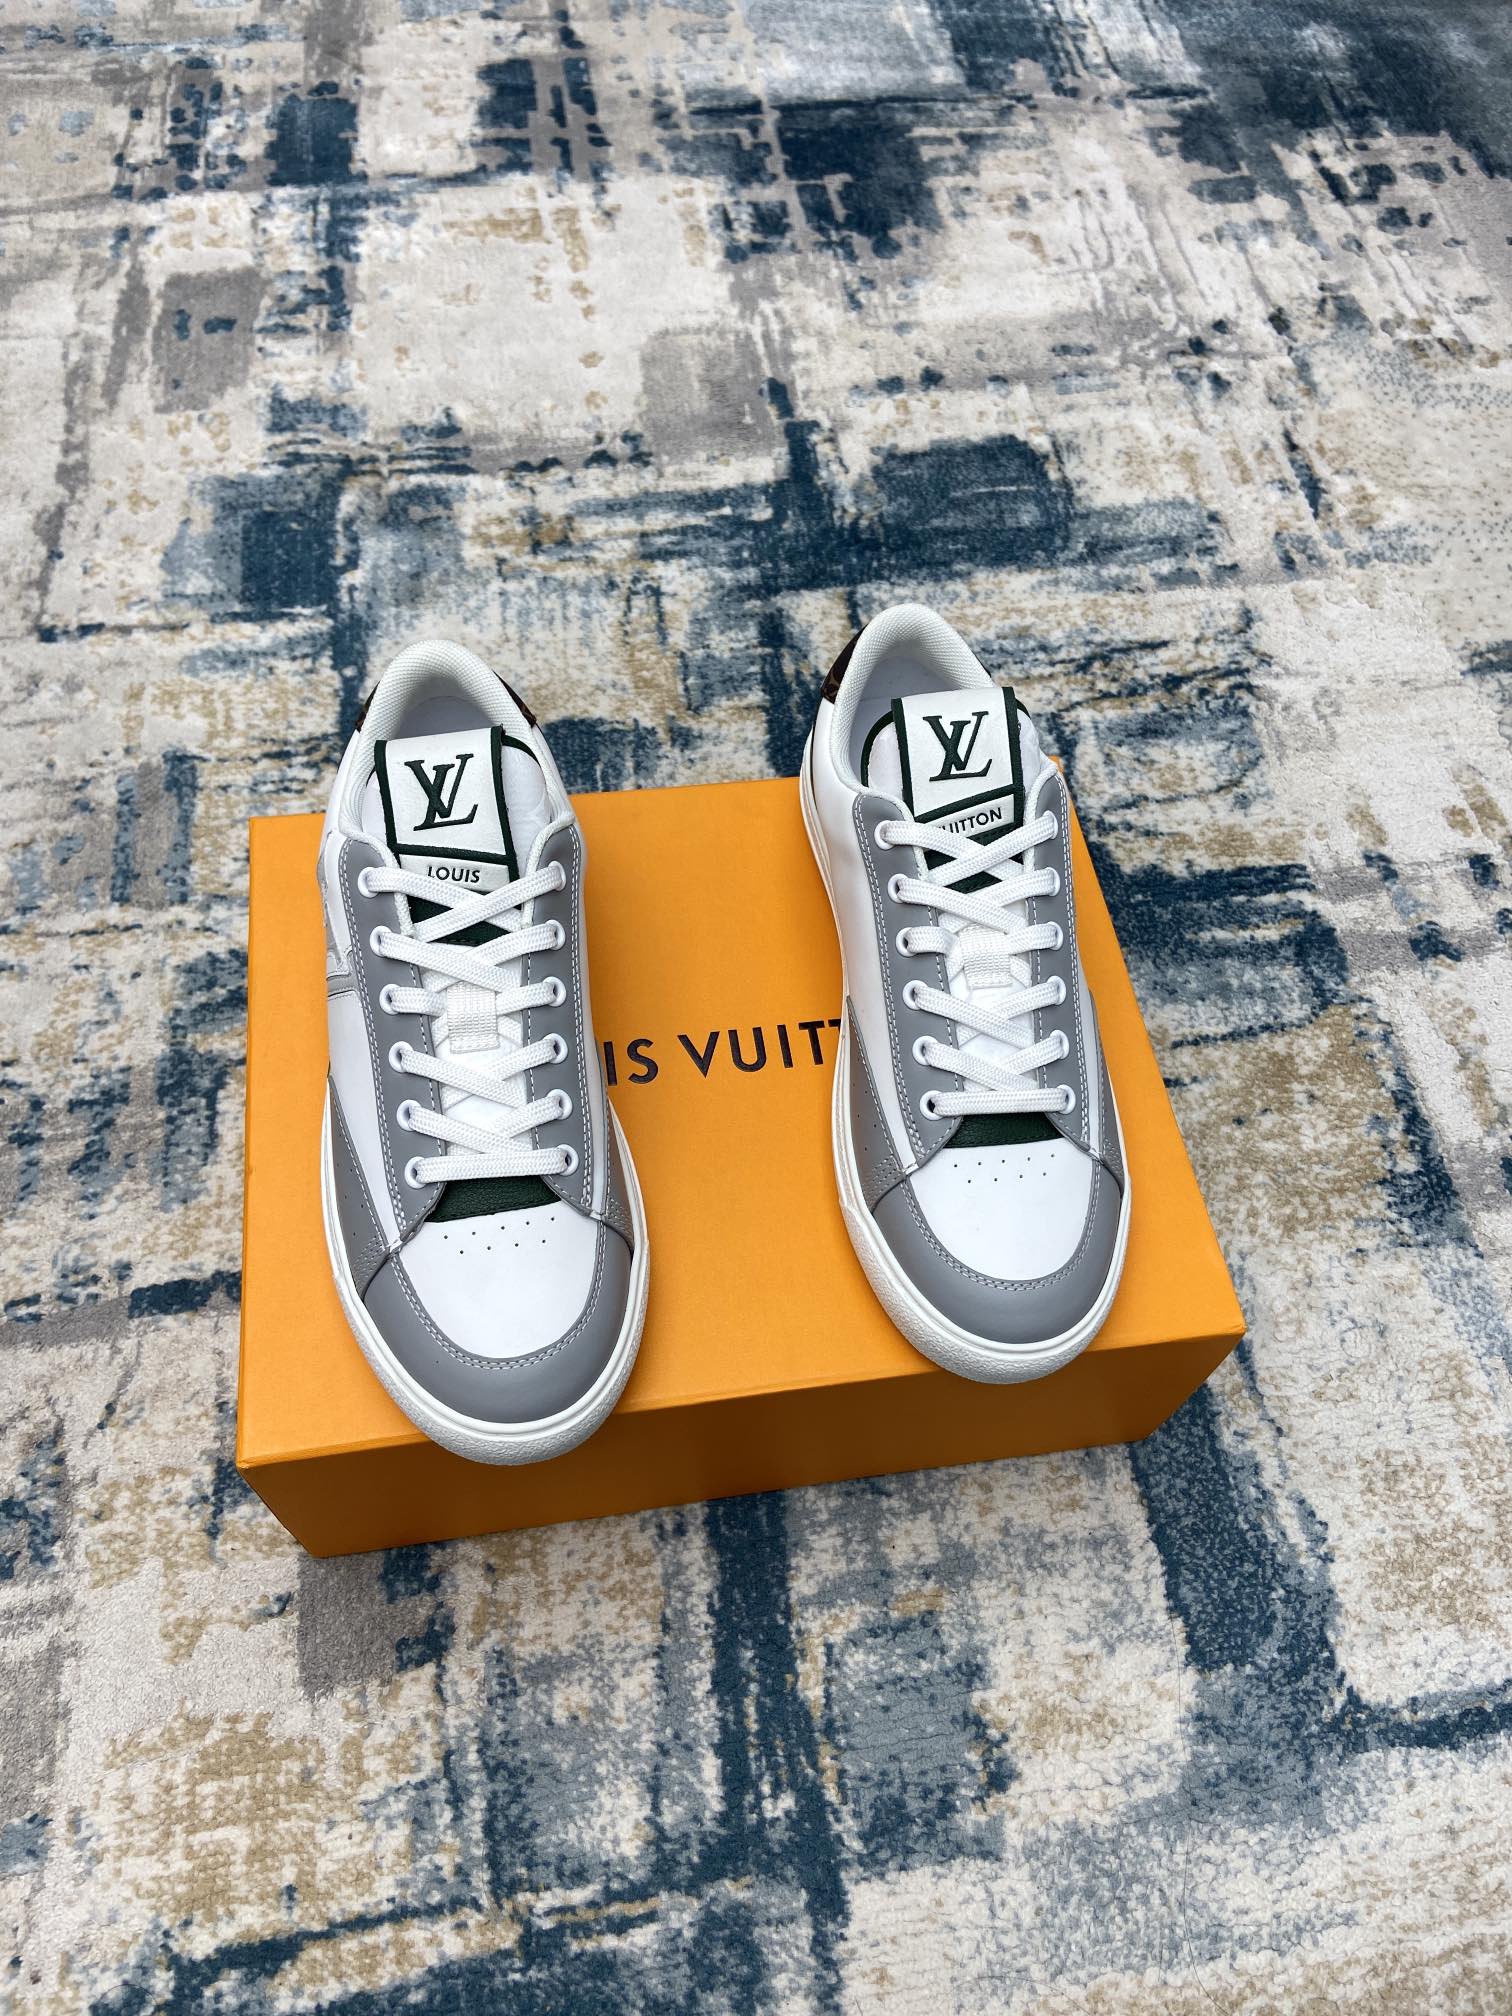 Louis Vuitton Skateboard Shoes Casual Shoes Unisex Cowhide Rubber Fashion Casual